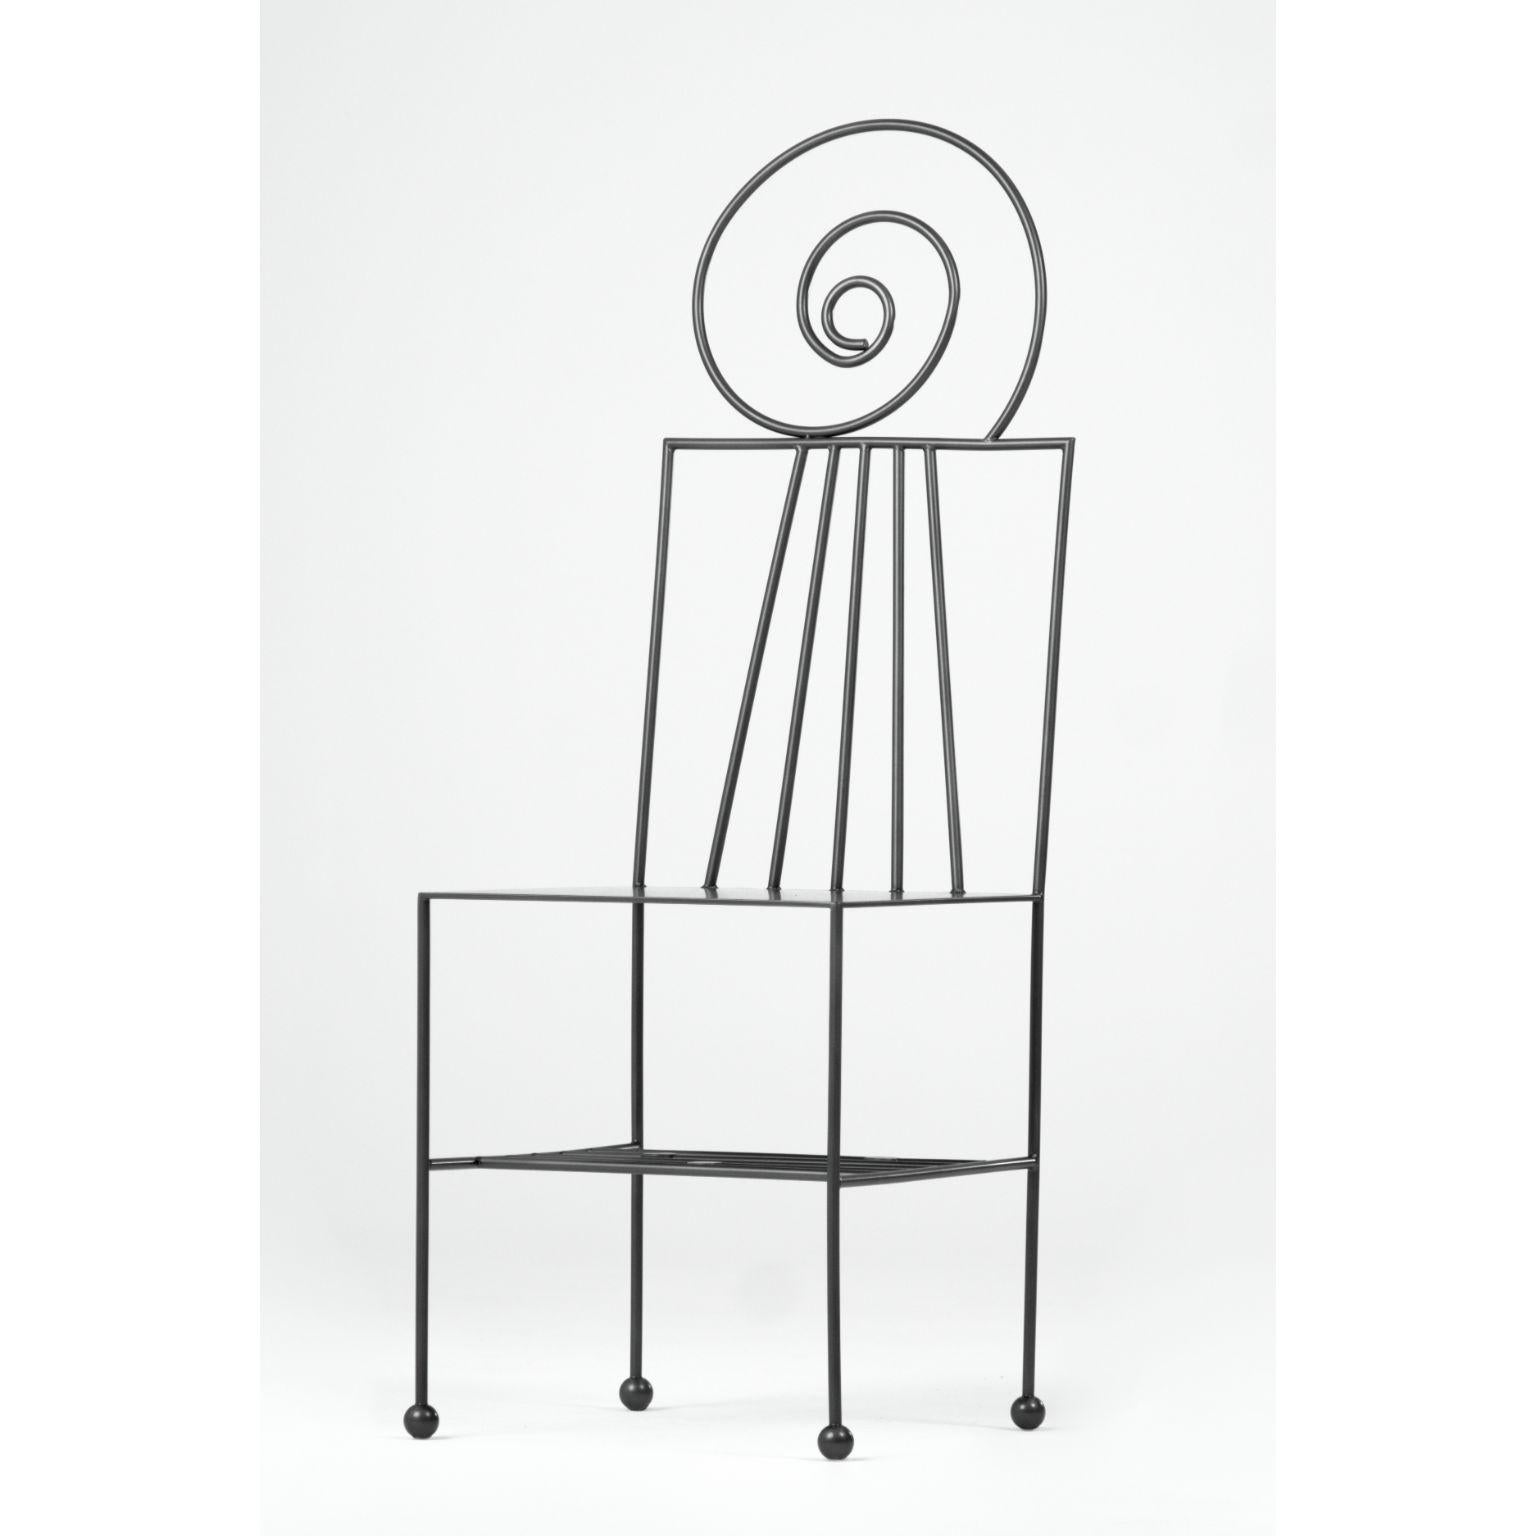 Set of 8 Collezione Surrealista Chairs by Qvinto Studio For Sale 4